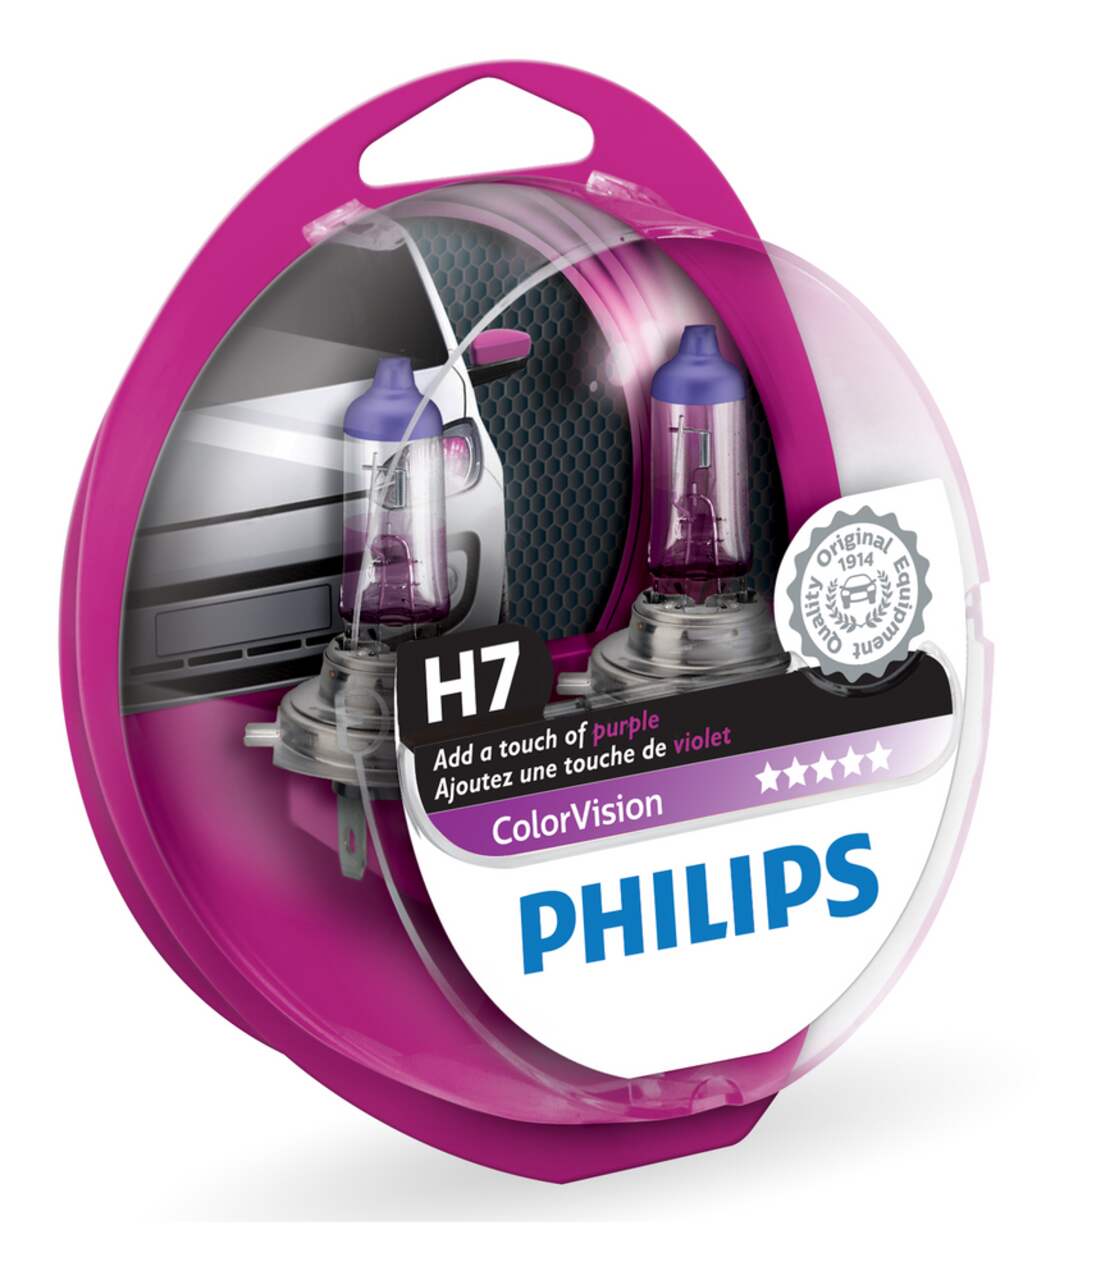 Philips H7 Standard Halogen Replacement Headlight Bulb, 2 Pack